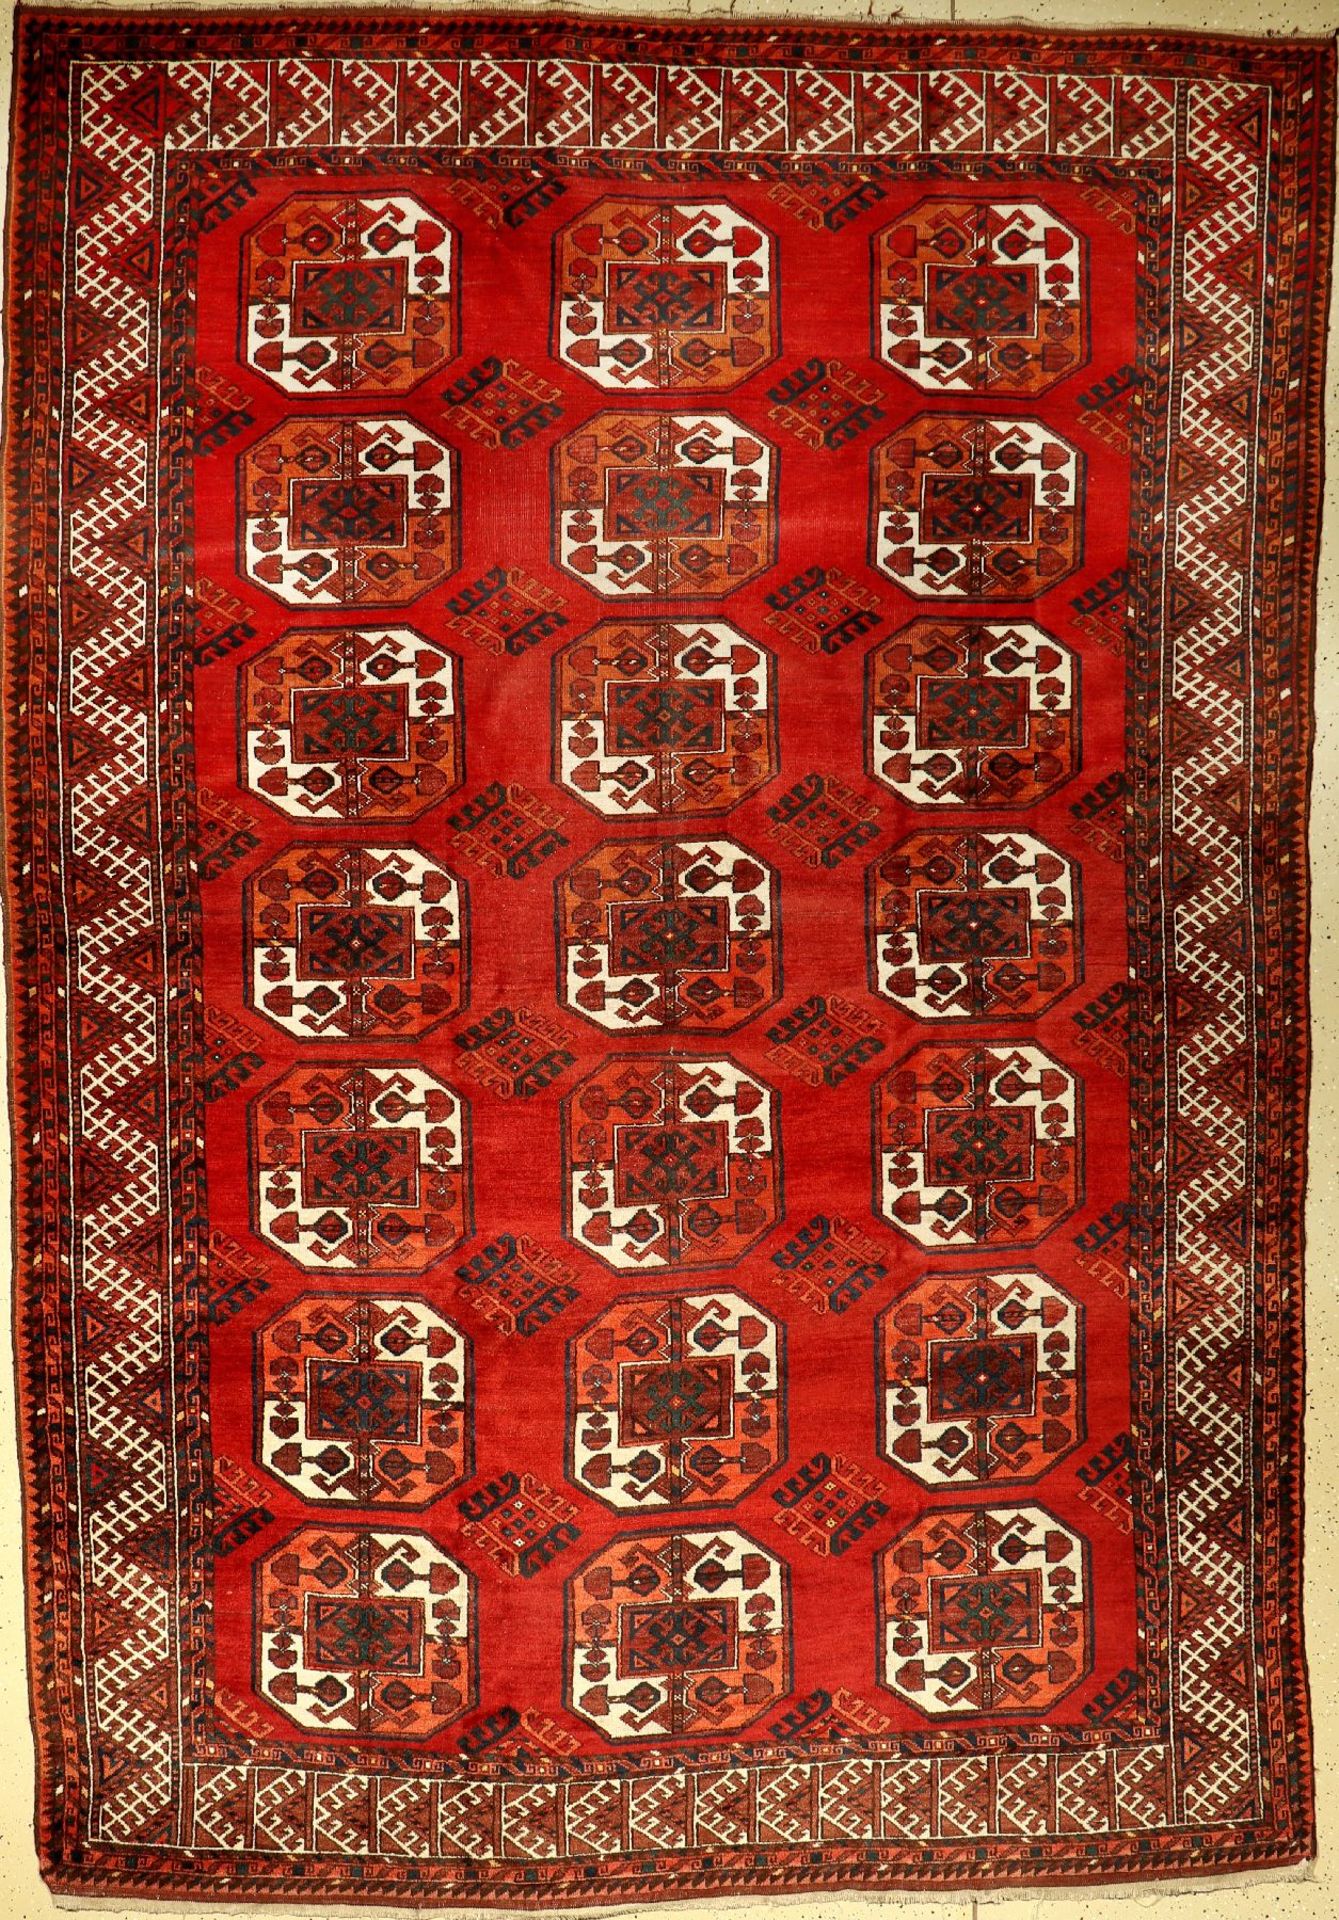 Kizel-Ayak main carpet, antique, Turkmenistan,around 1900, wool on wool, approx. 323 x 229 cm,